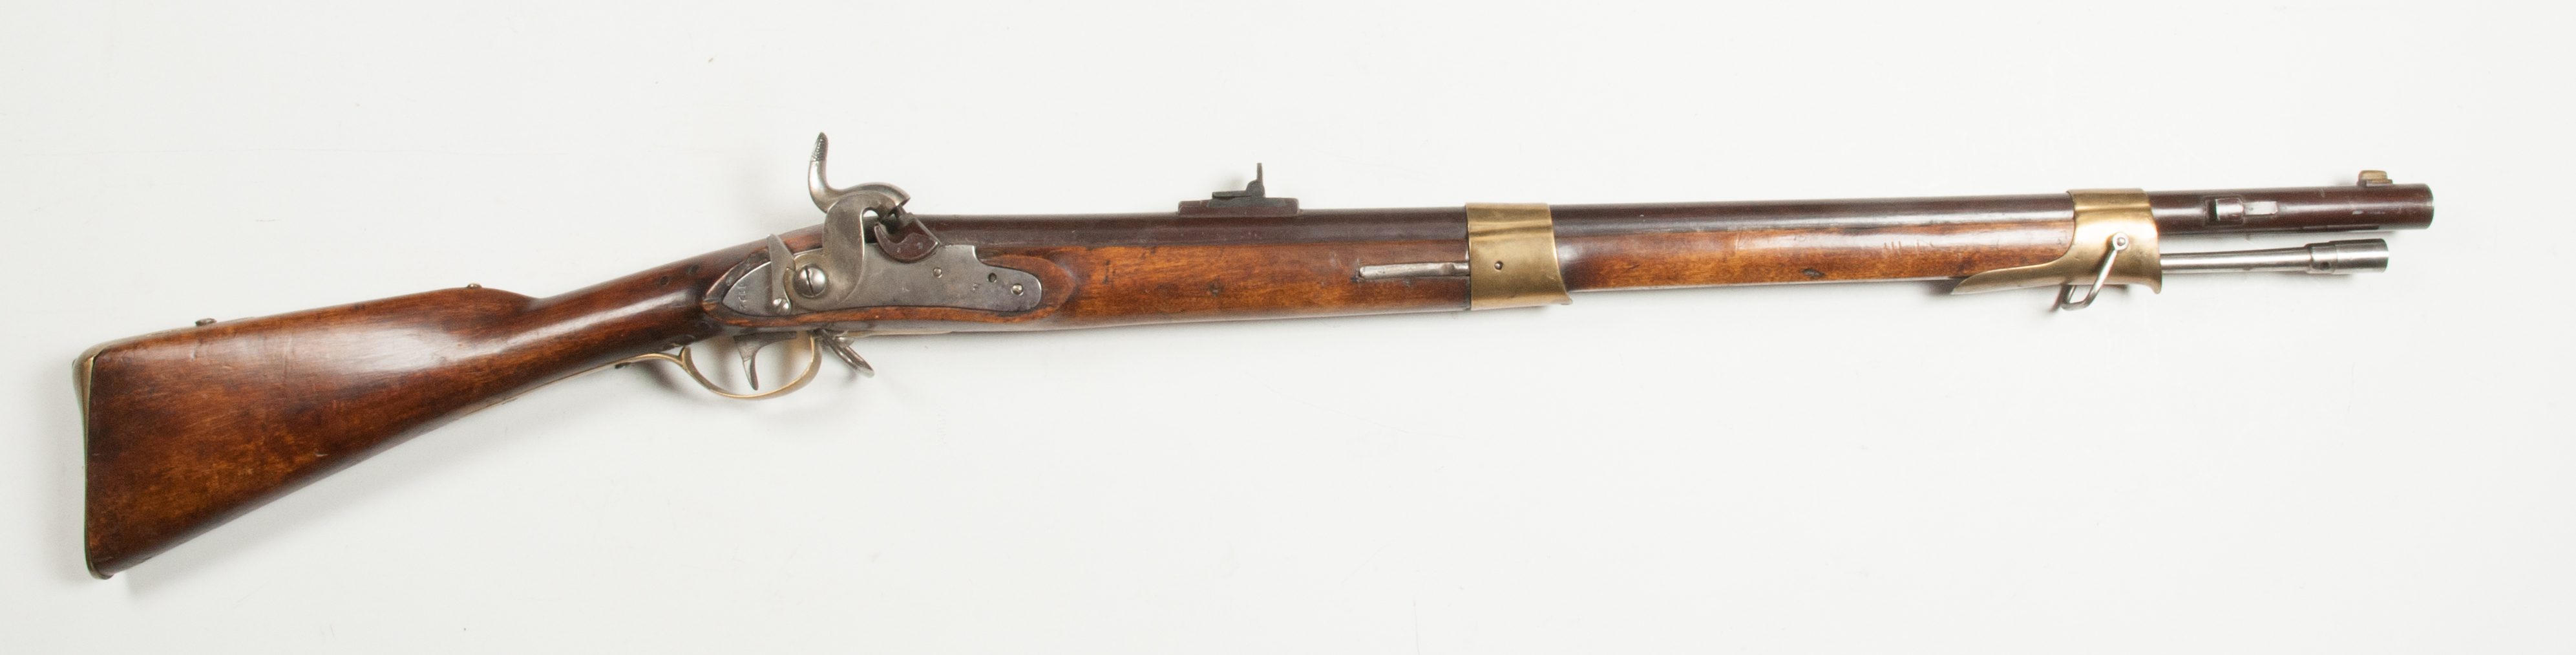 ./guns/rifle/bilder/Rifle-Kongsberg-Perkusjon-M1825-41-60-1742-1.jpg